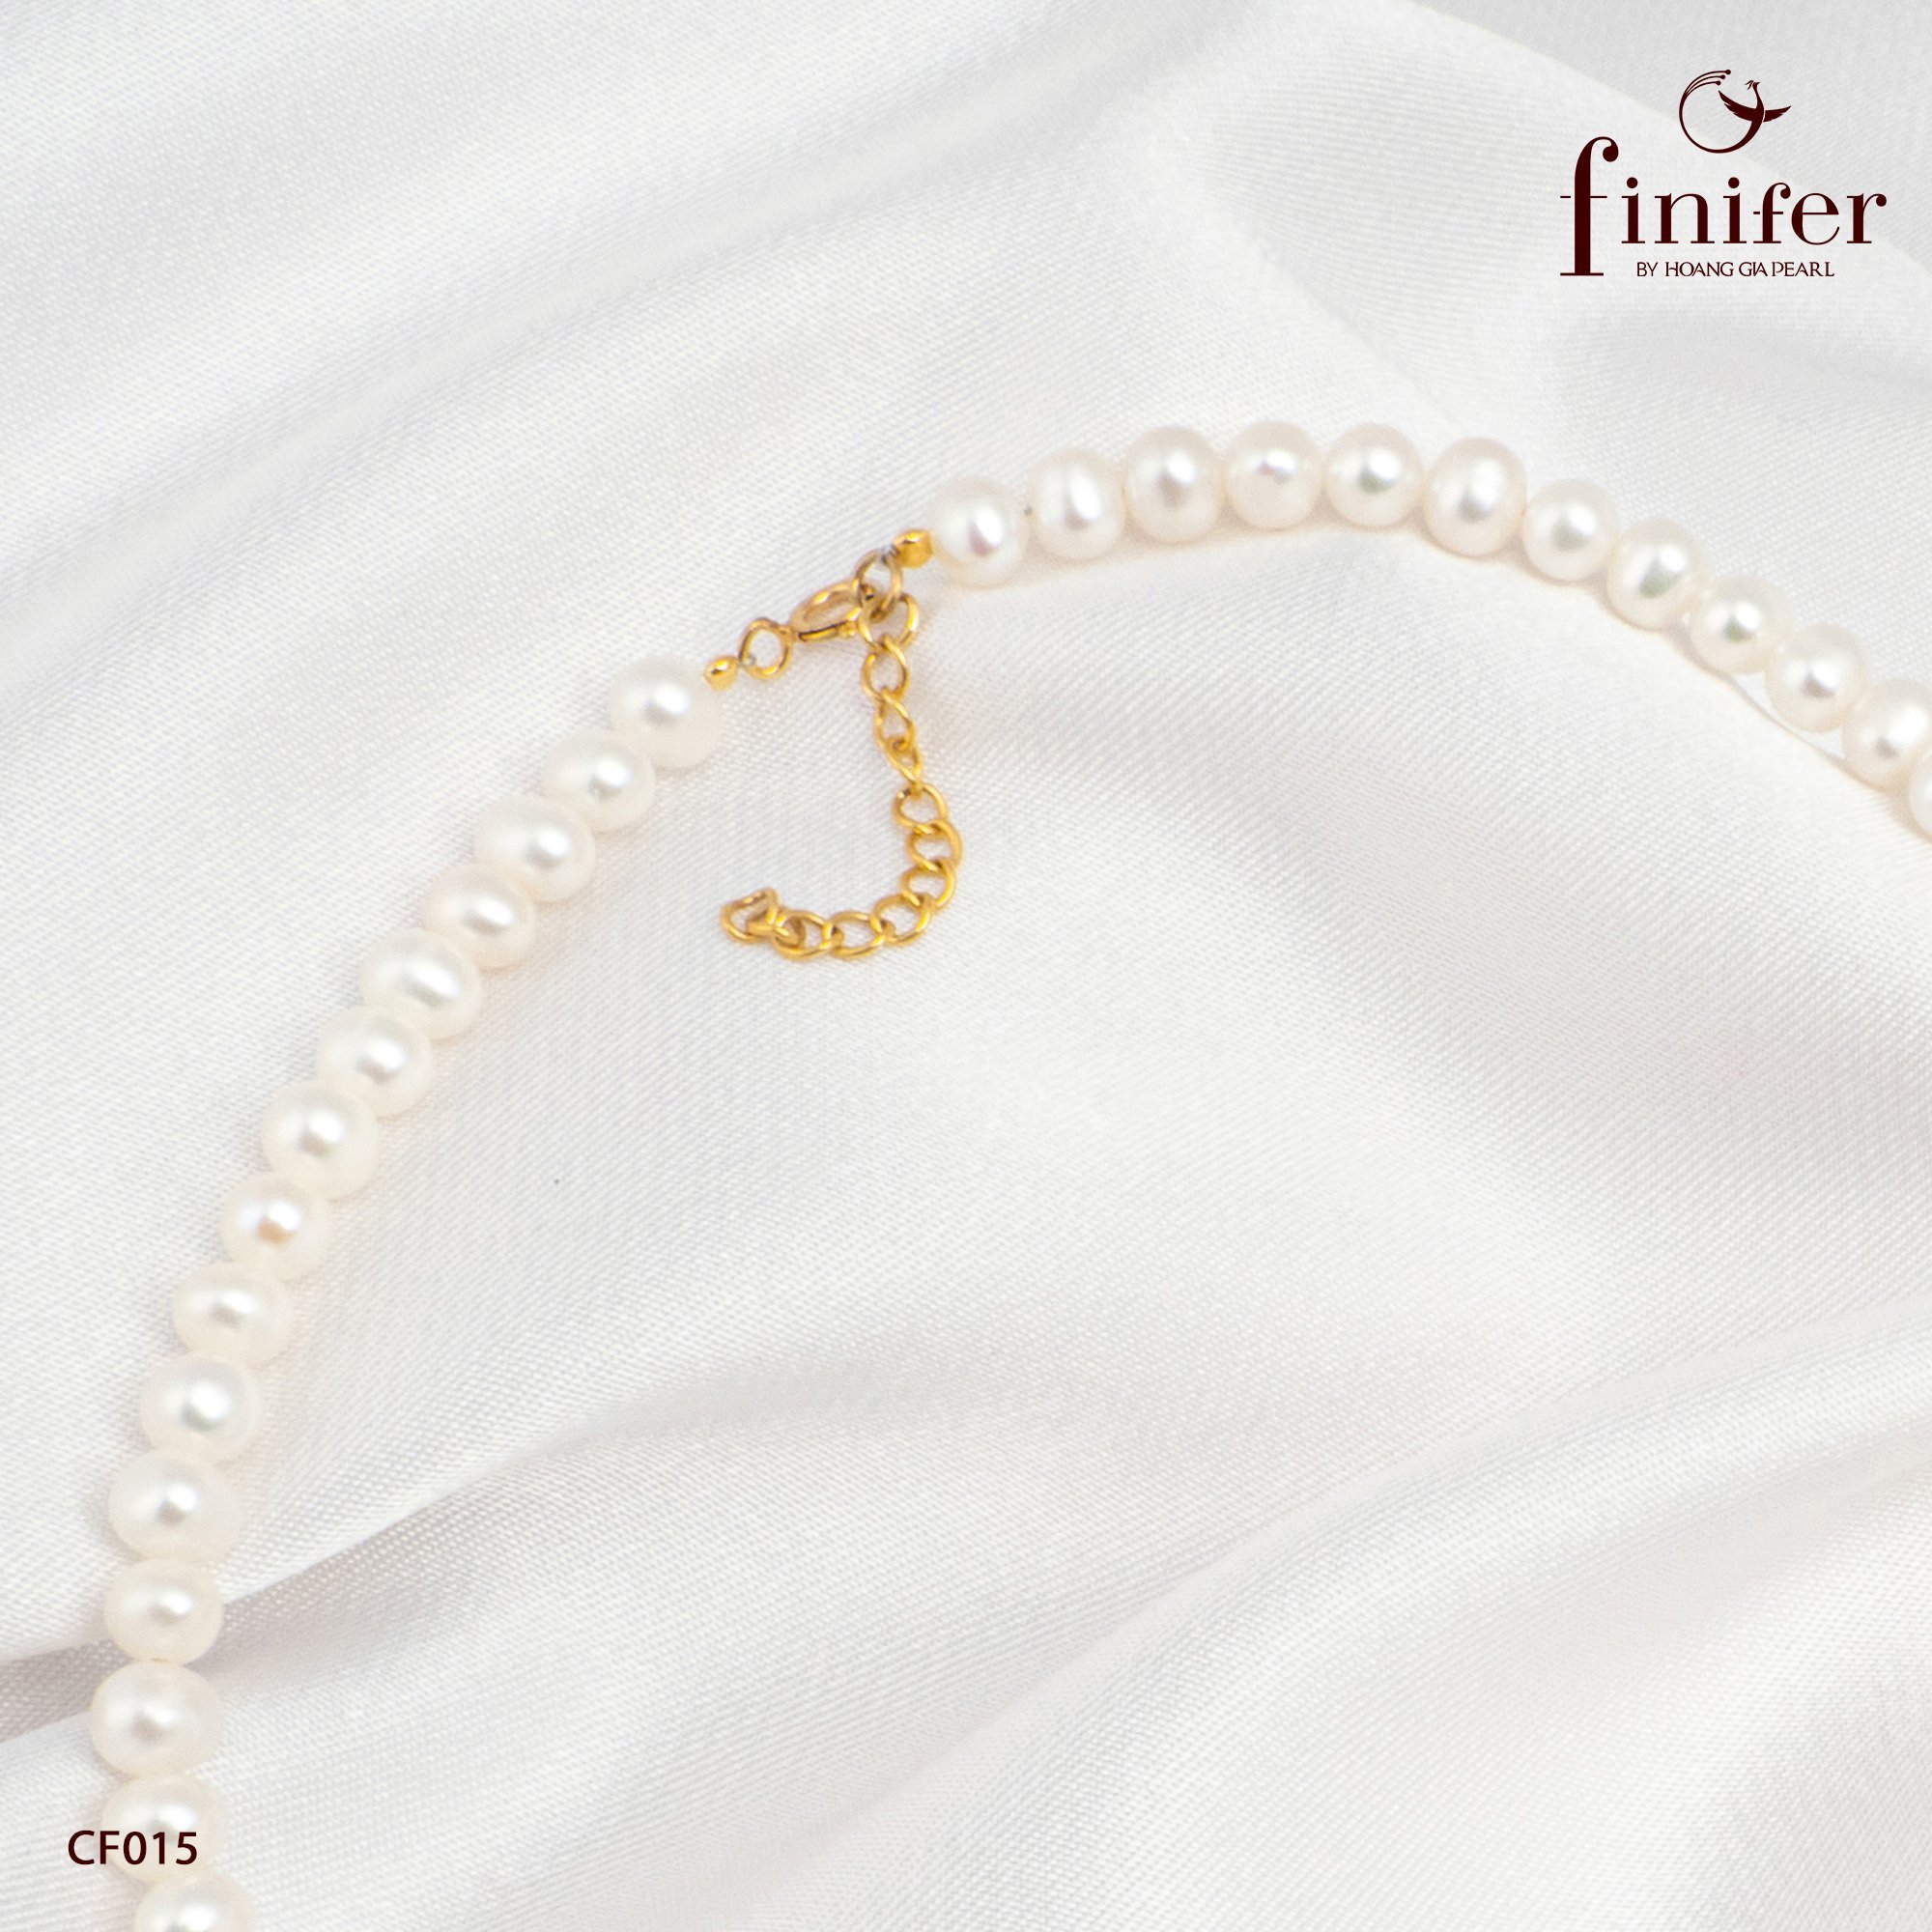 Chuỗi Cổ Ngọc Trai The Lover Finifer CF015 (L)